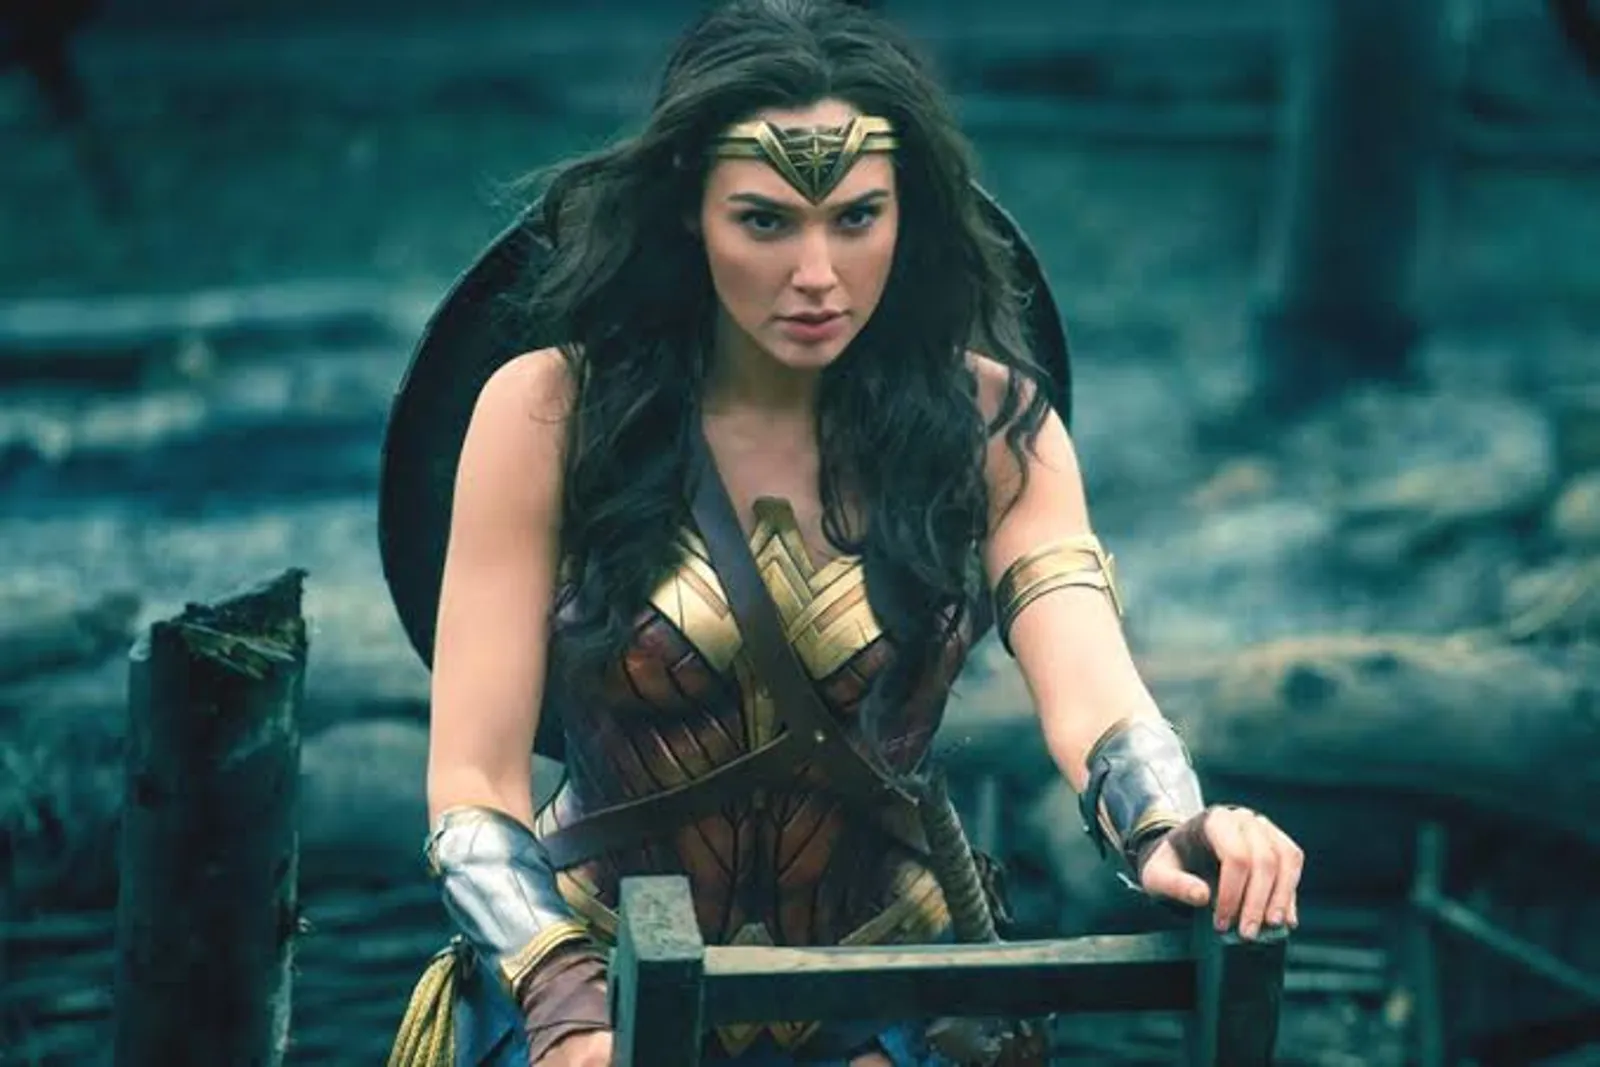 Rilis Mundur ke 14 Agustus, Ini 4 Fakta Menarik Film Wonder Woman 1984